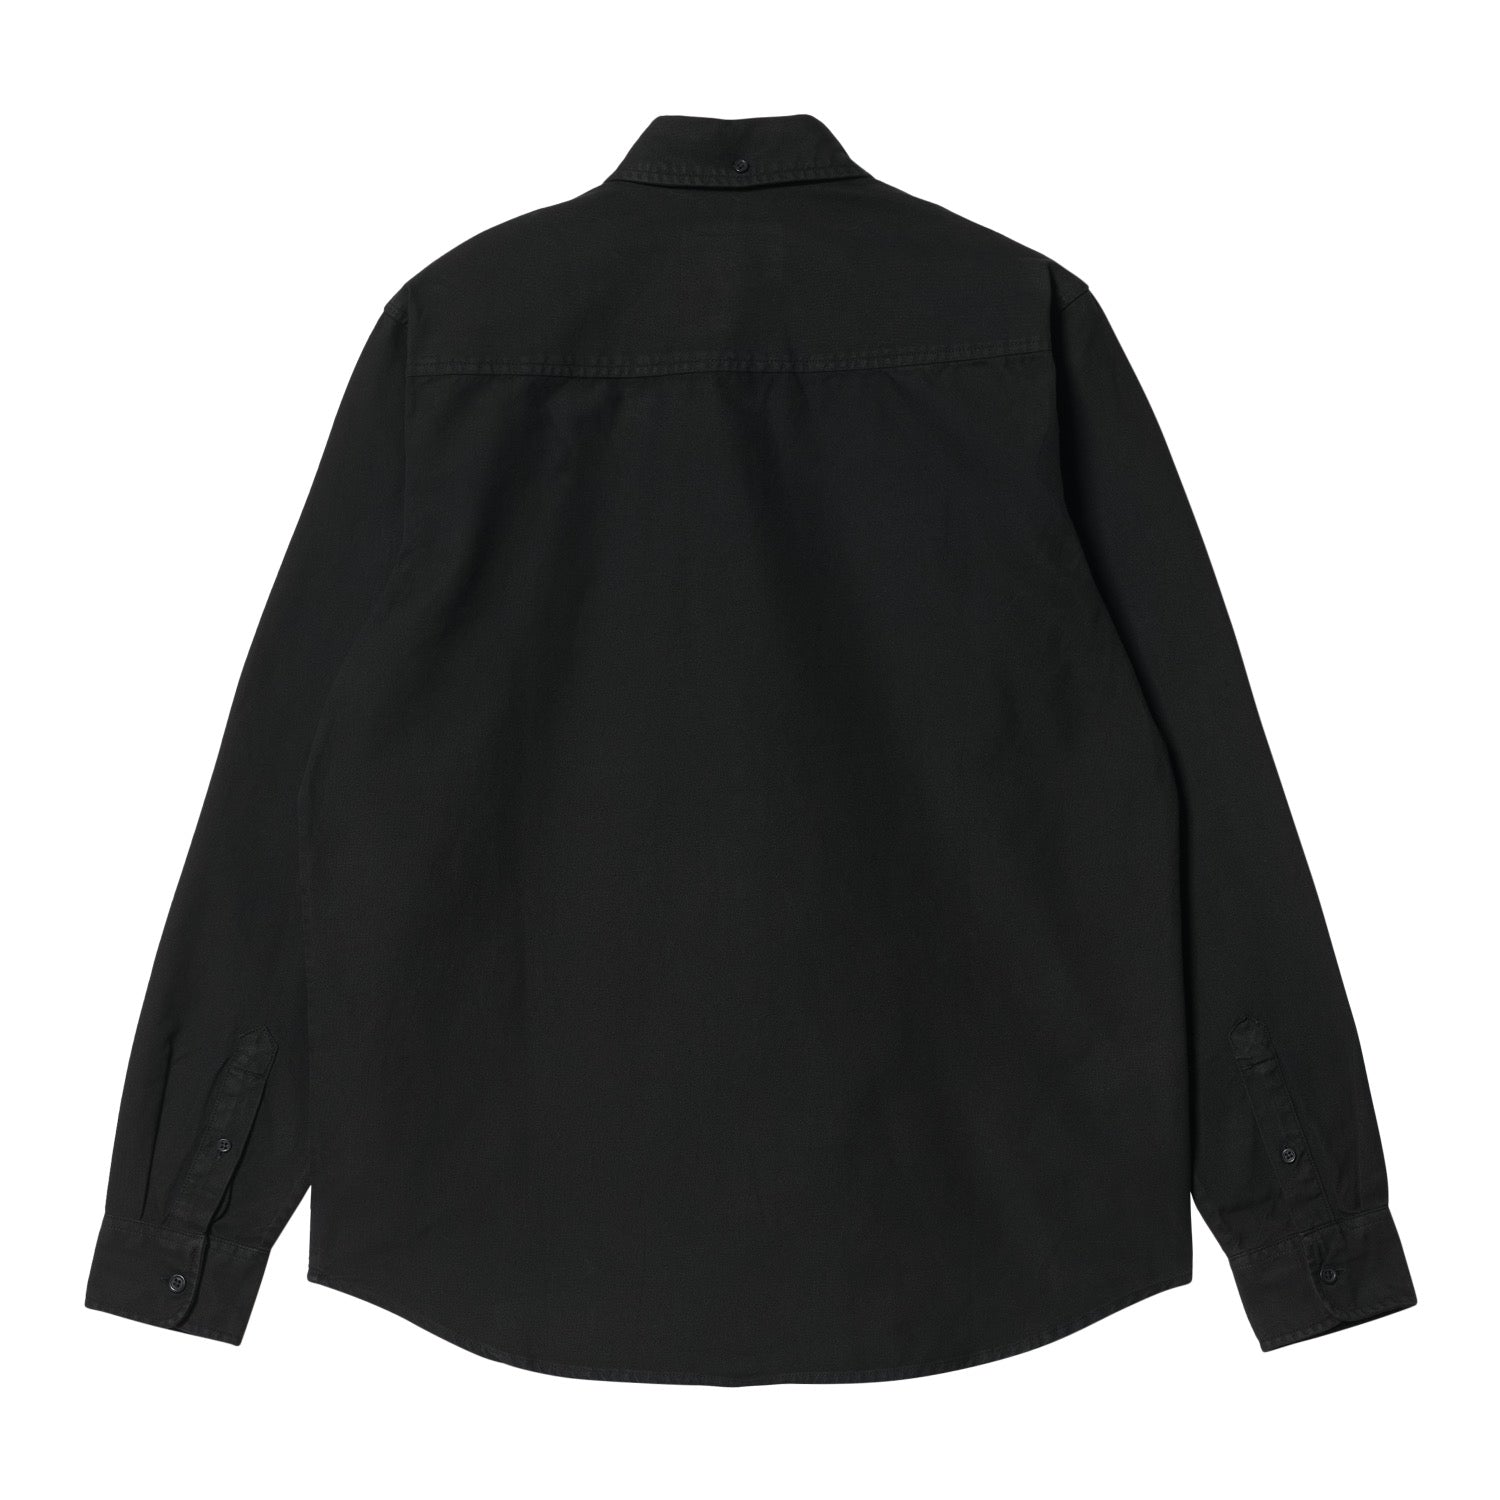 L/S BOLTON SHIRT - Black (garment dyed)